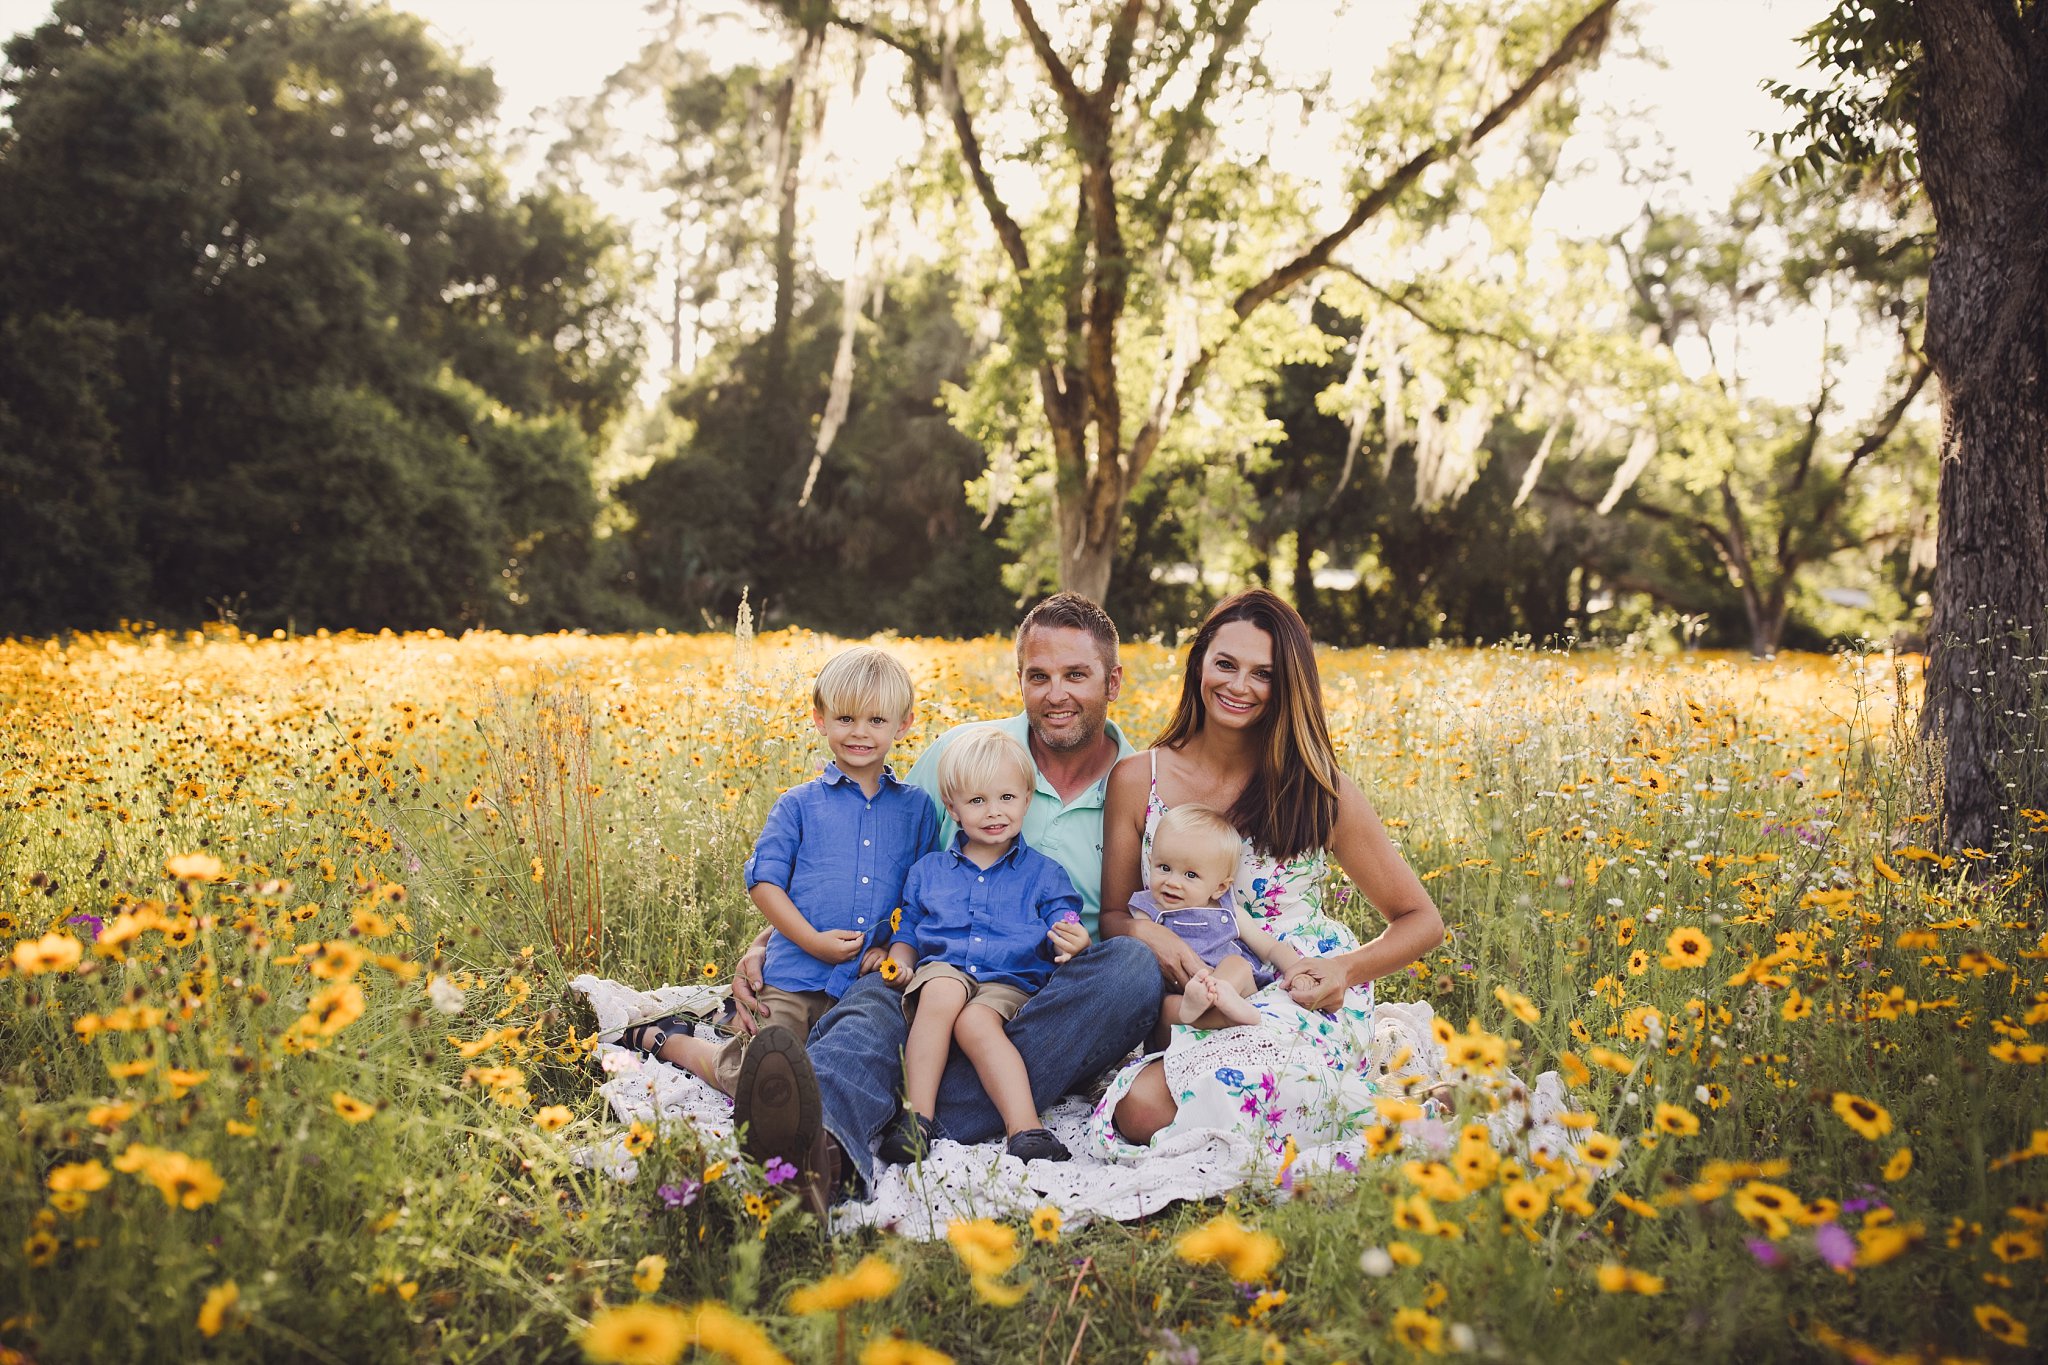 NE FL Family Photography famiy of 5 3 little boys in flower field